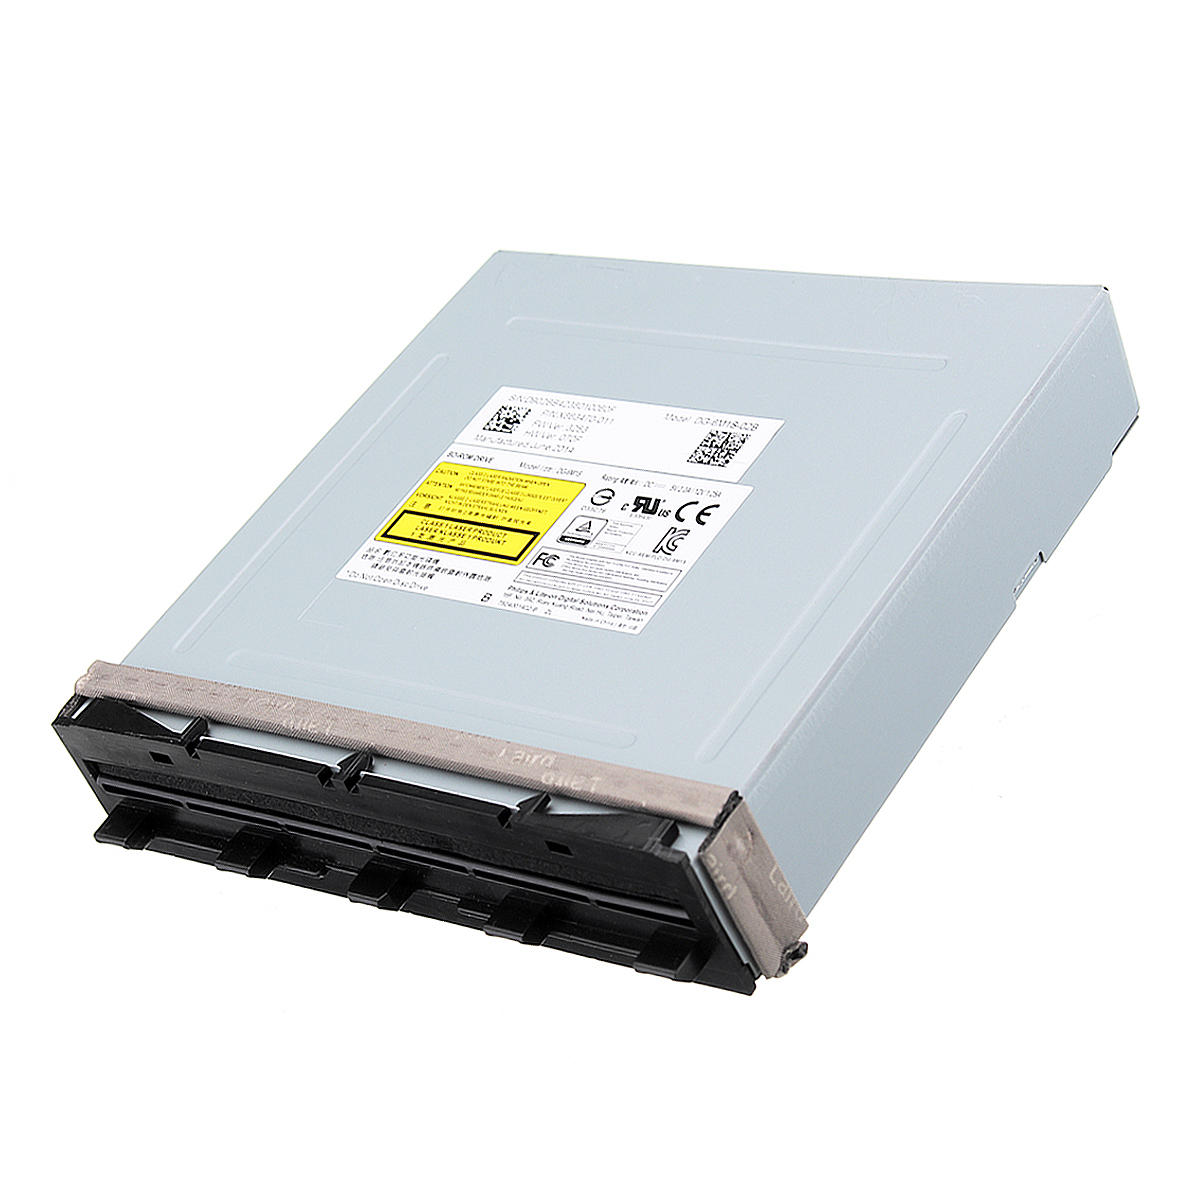 

Замена Lite-On DG-6M1S B150 Лазер Для Xbox One Video Game Console Blu-ray Disk Drive